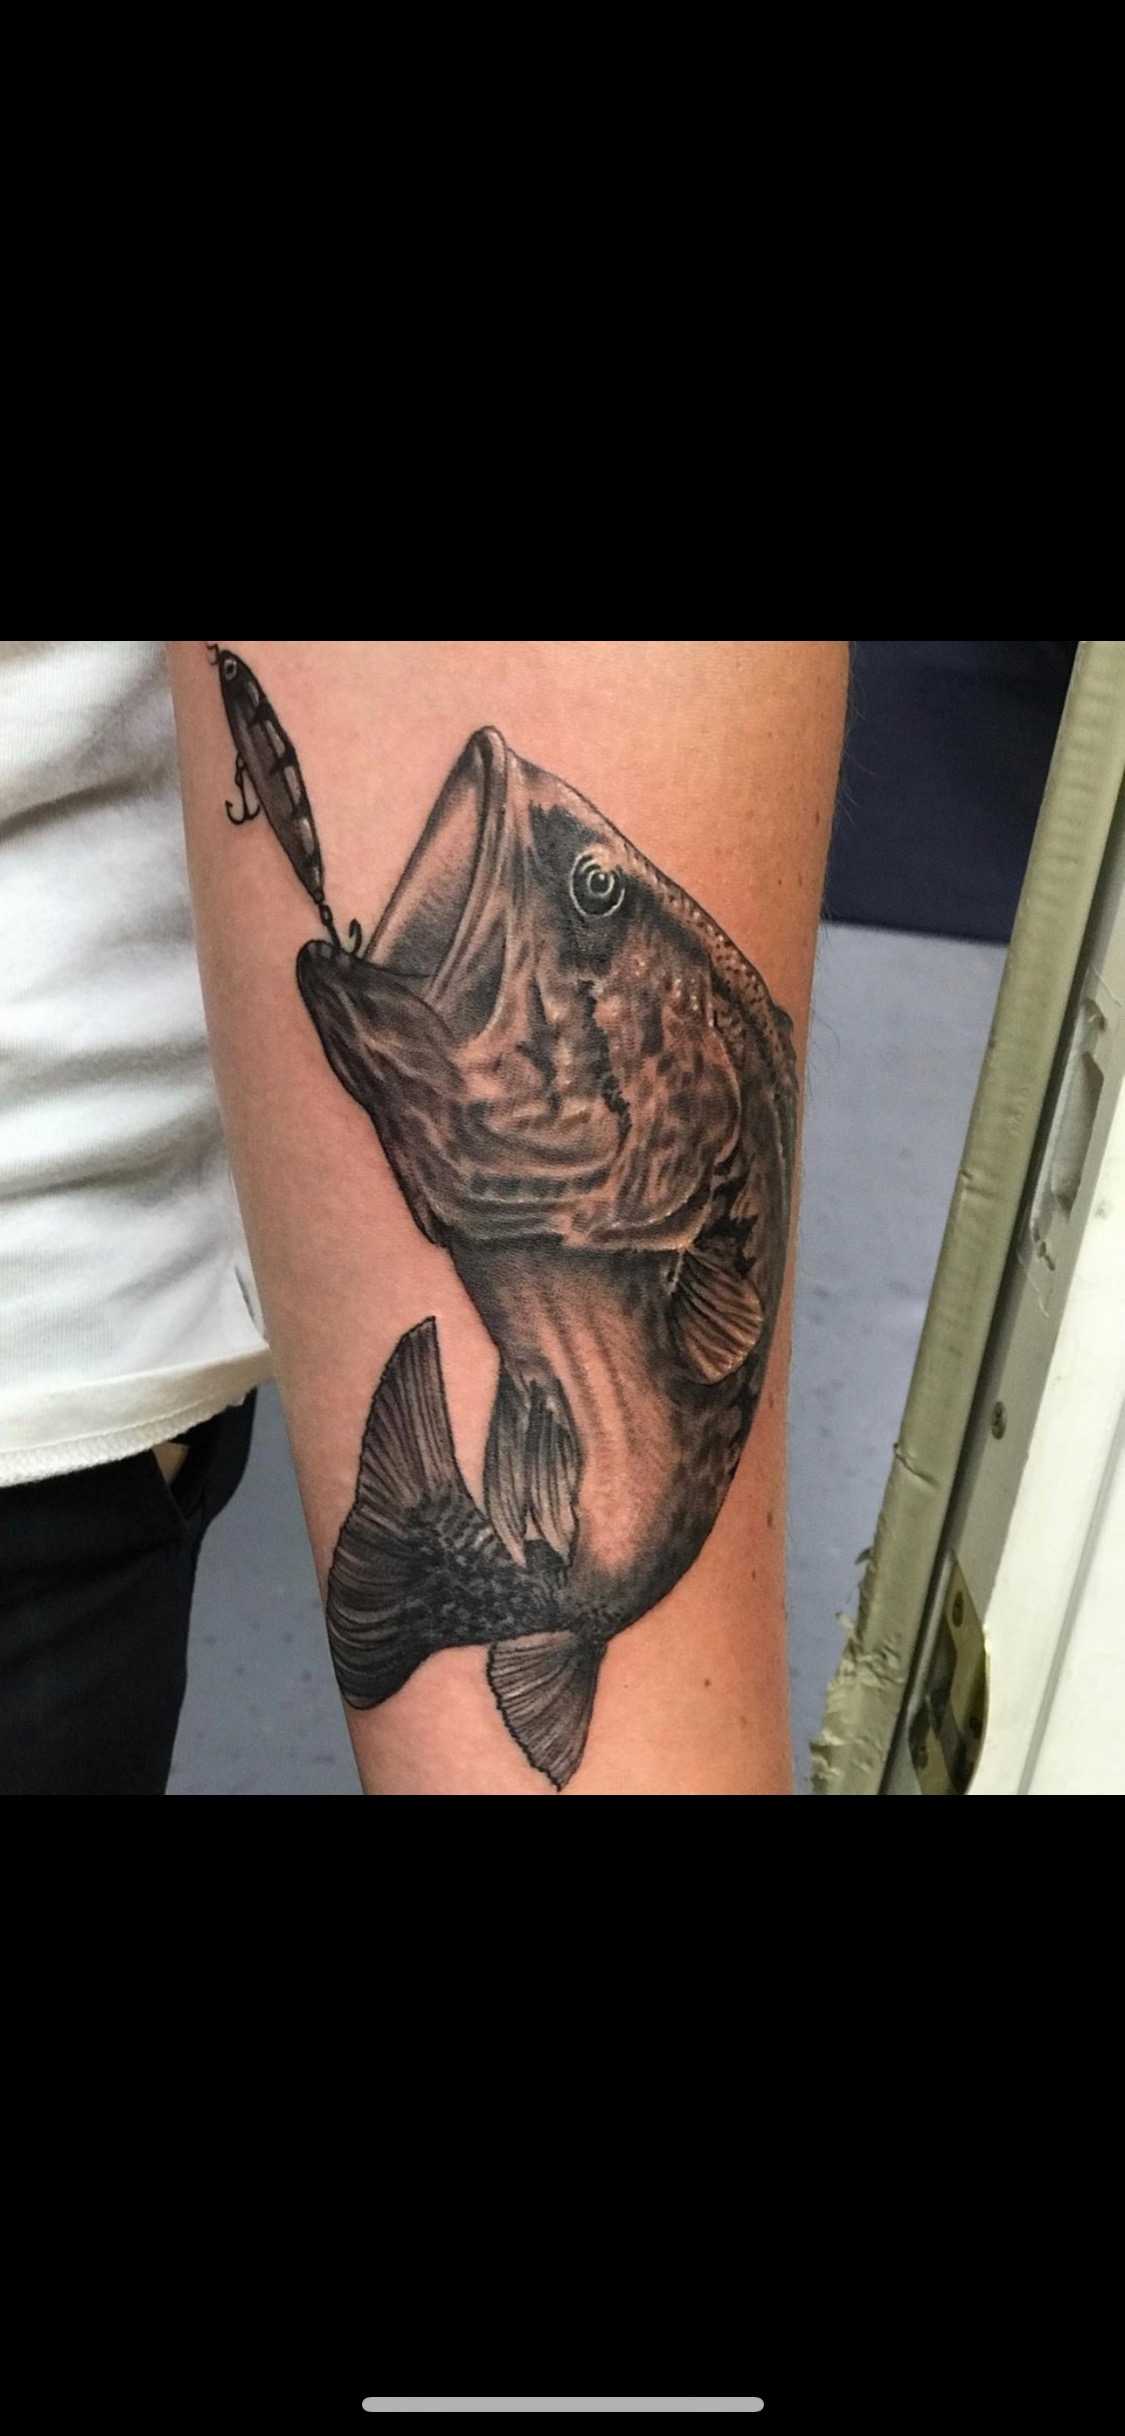 bass fishing hook tattoo designs